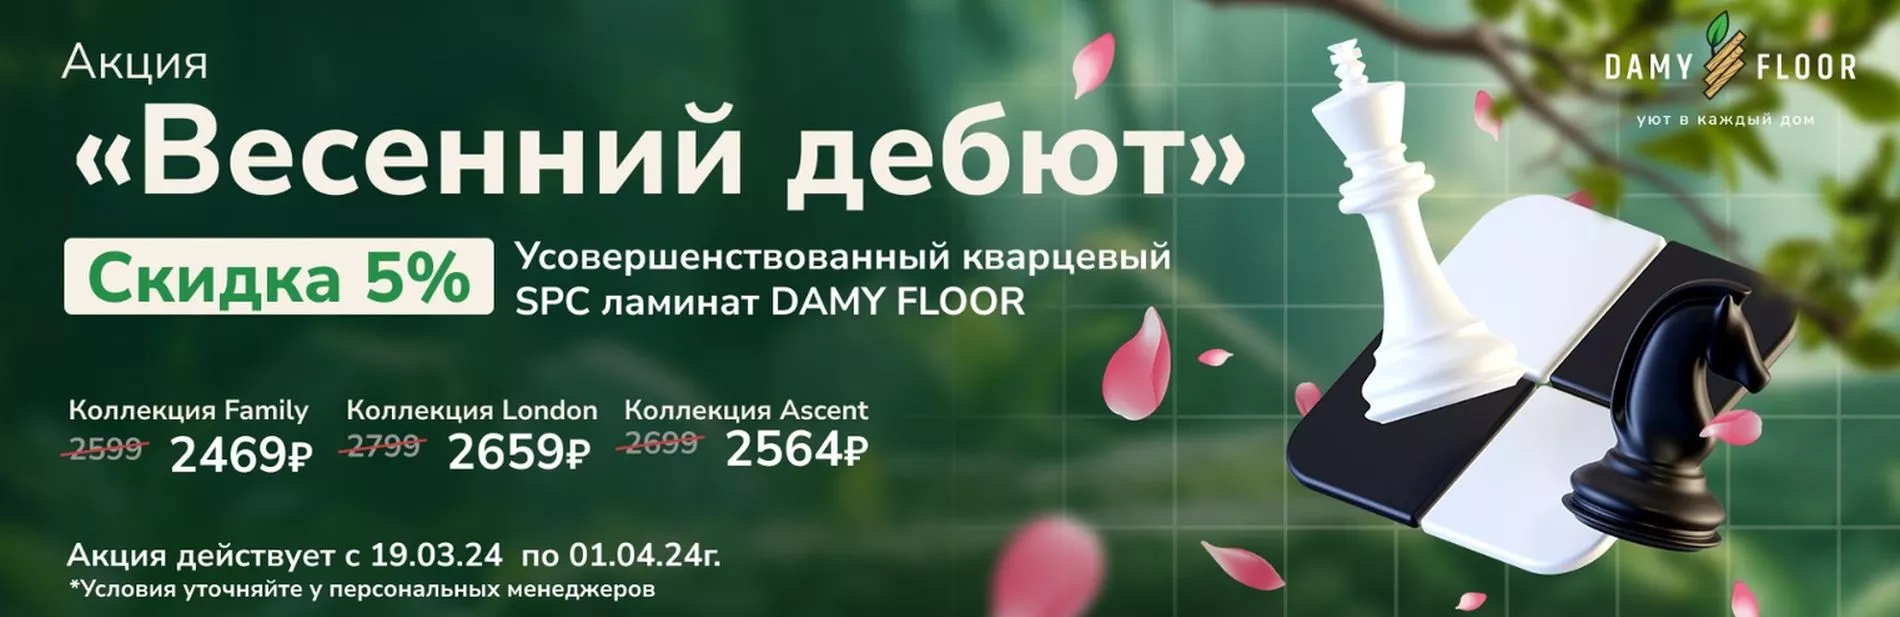 Весенний дебют DAMY FLOOR